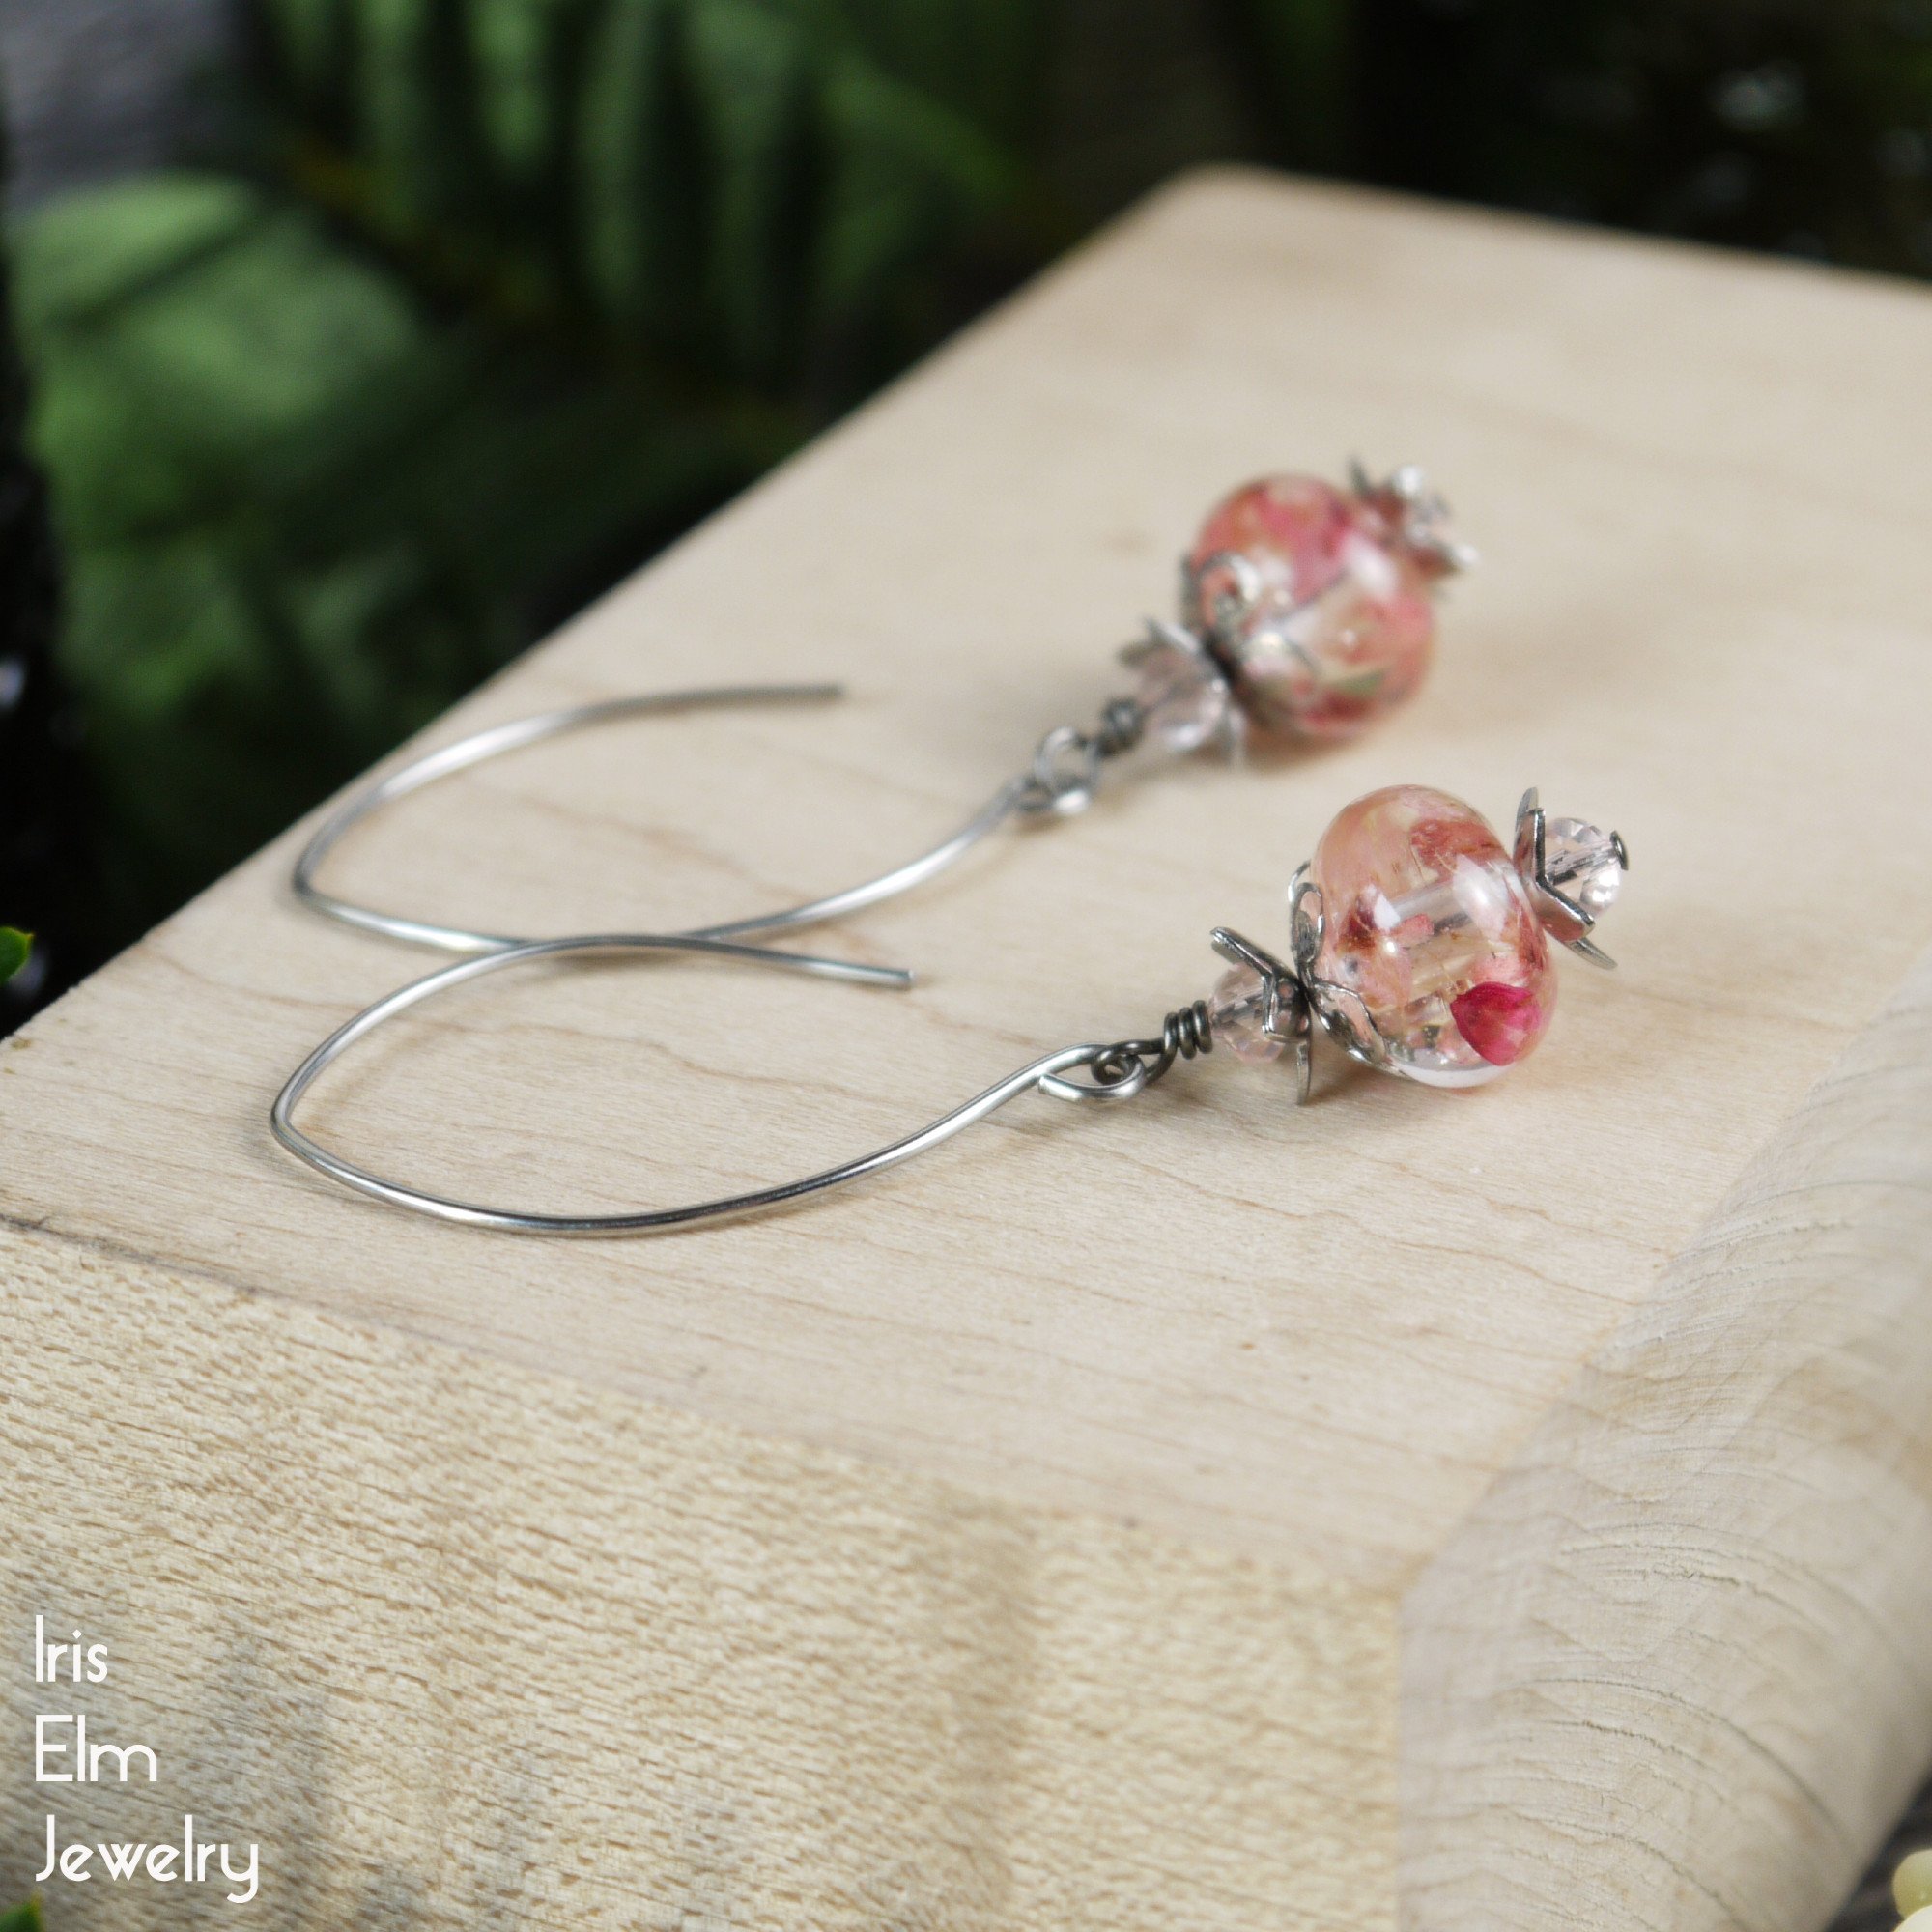 https://images.squarespace-cdn.com/content/v1/58ece8dff7e0ab189ab817d6/1702920866449-FRSL989E4VEVUMHS2036/154d-pink-wildflower-flower-resin-marquise-earrings-handmade-iris-elm-jewelry.jpg